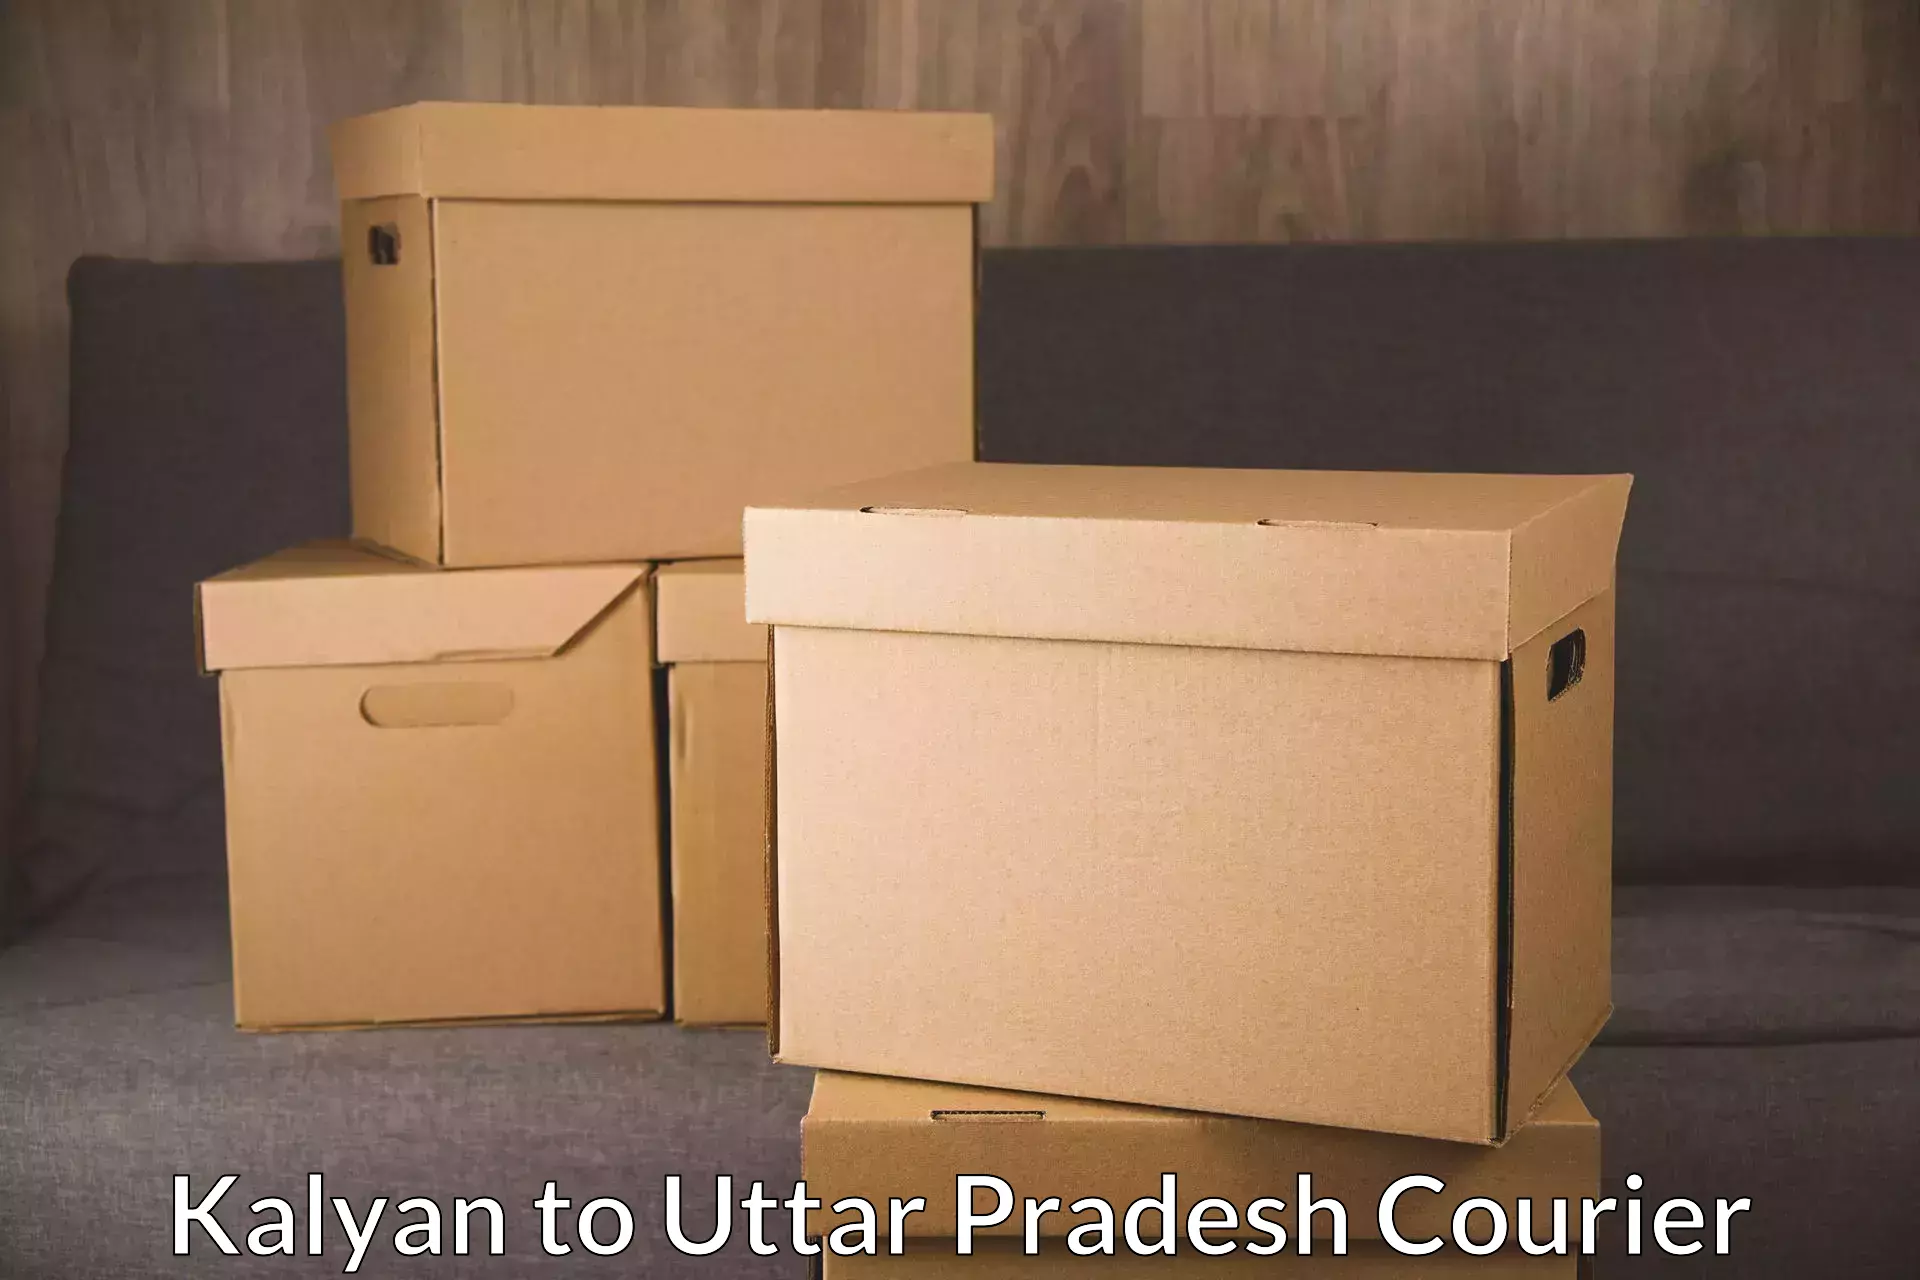 High-priority parcel service Kalyan to Agra